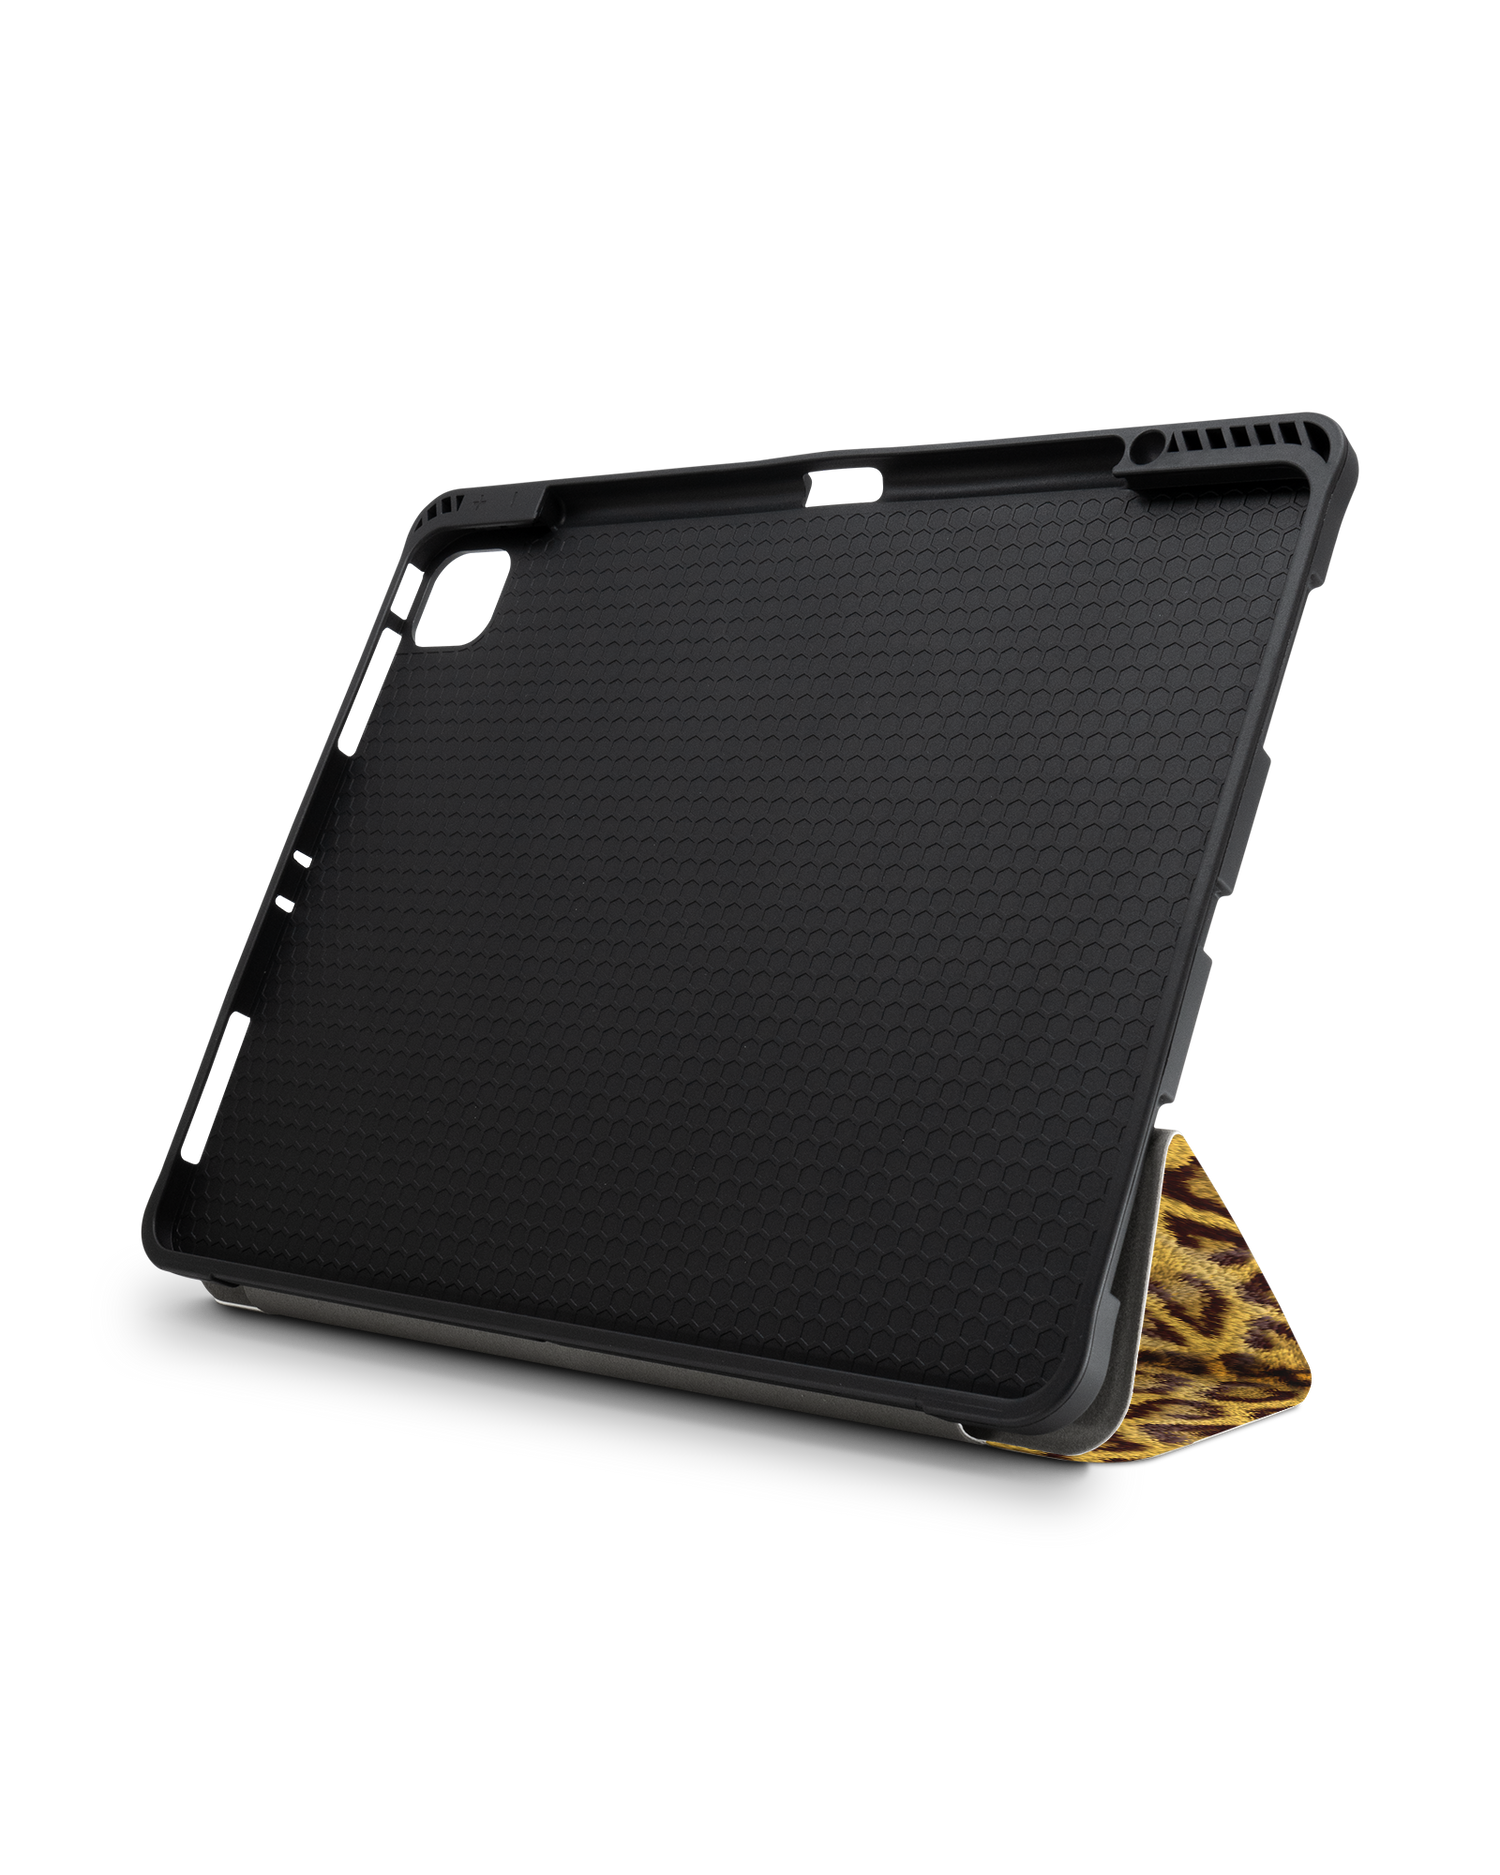 Leopard Skin iPad Hülle mit Stifthalter für Apple iPad Pro 6 12.9